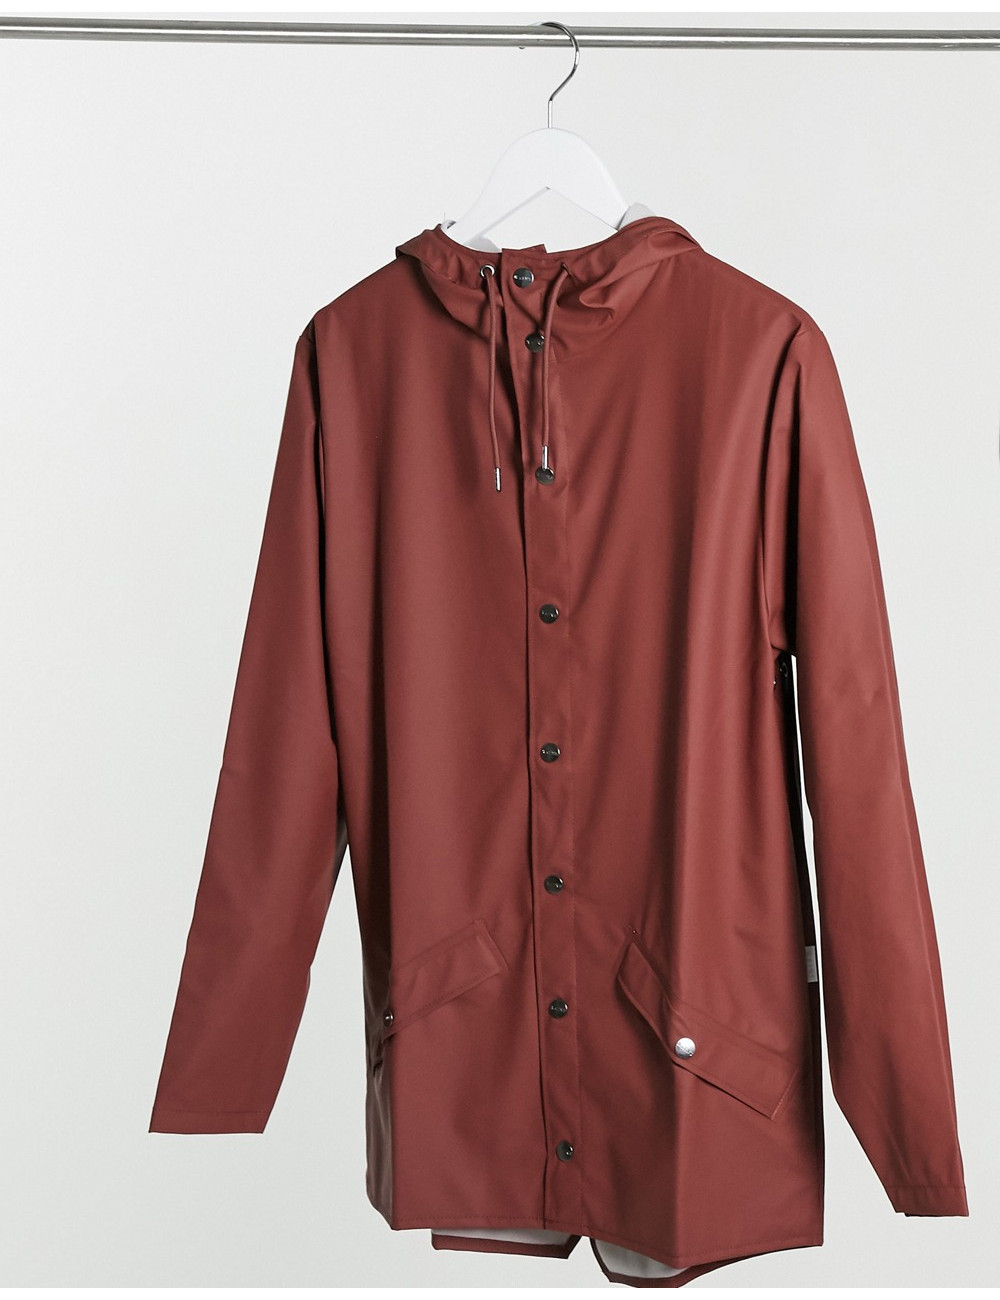 Rains jacket in maroon